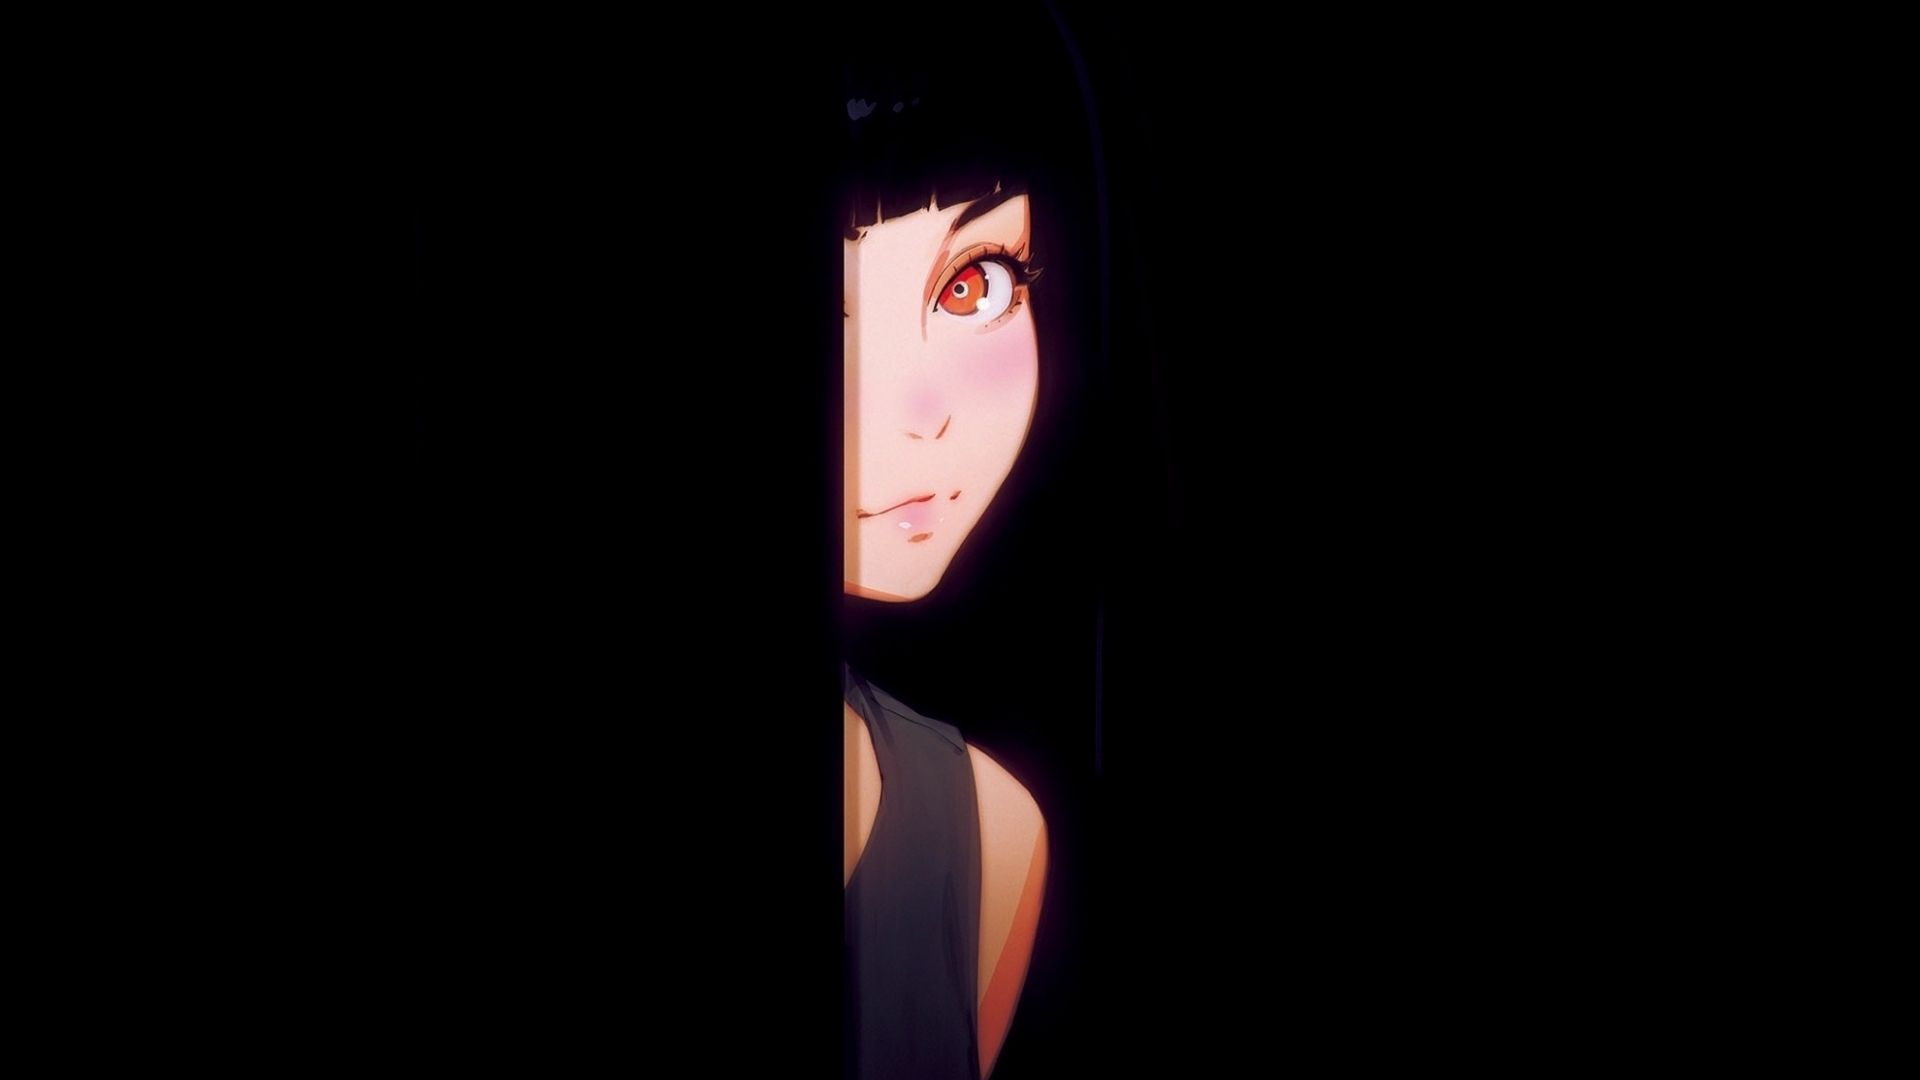 Download 1920x1080 wallpaper anime girl, original, dark, minimal